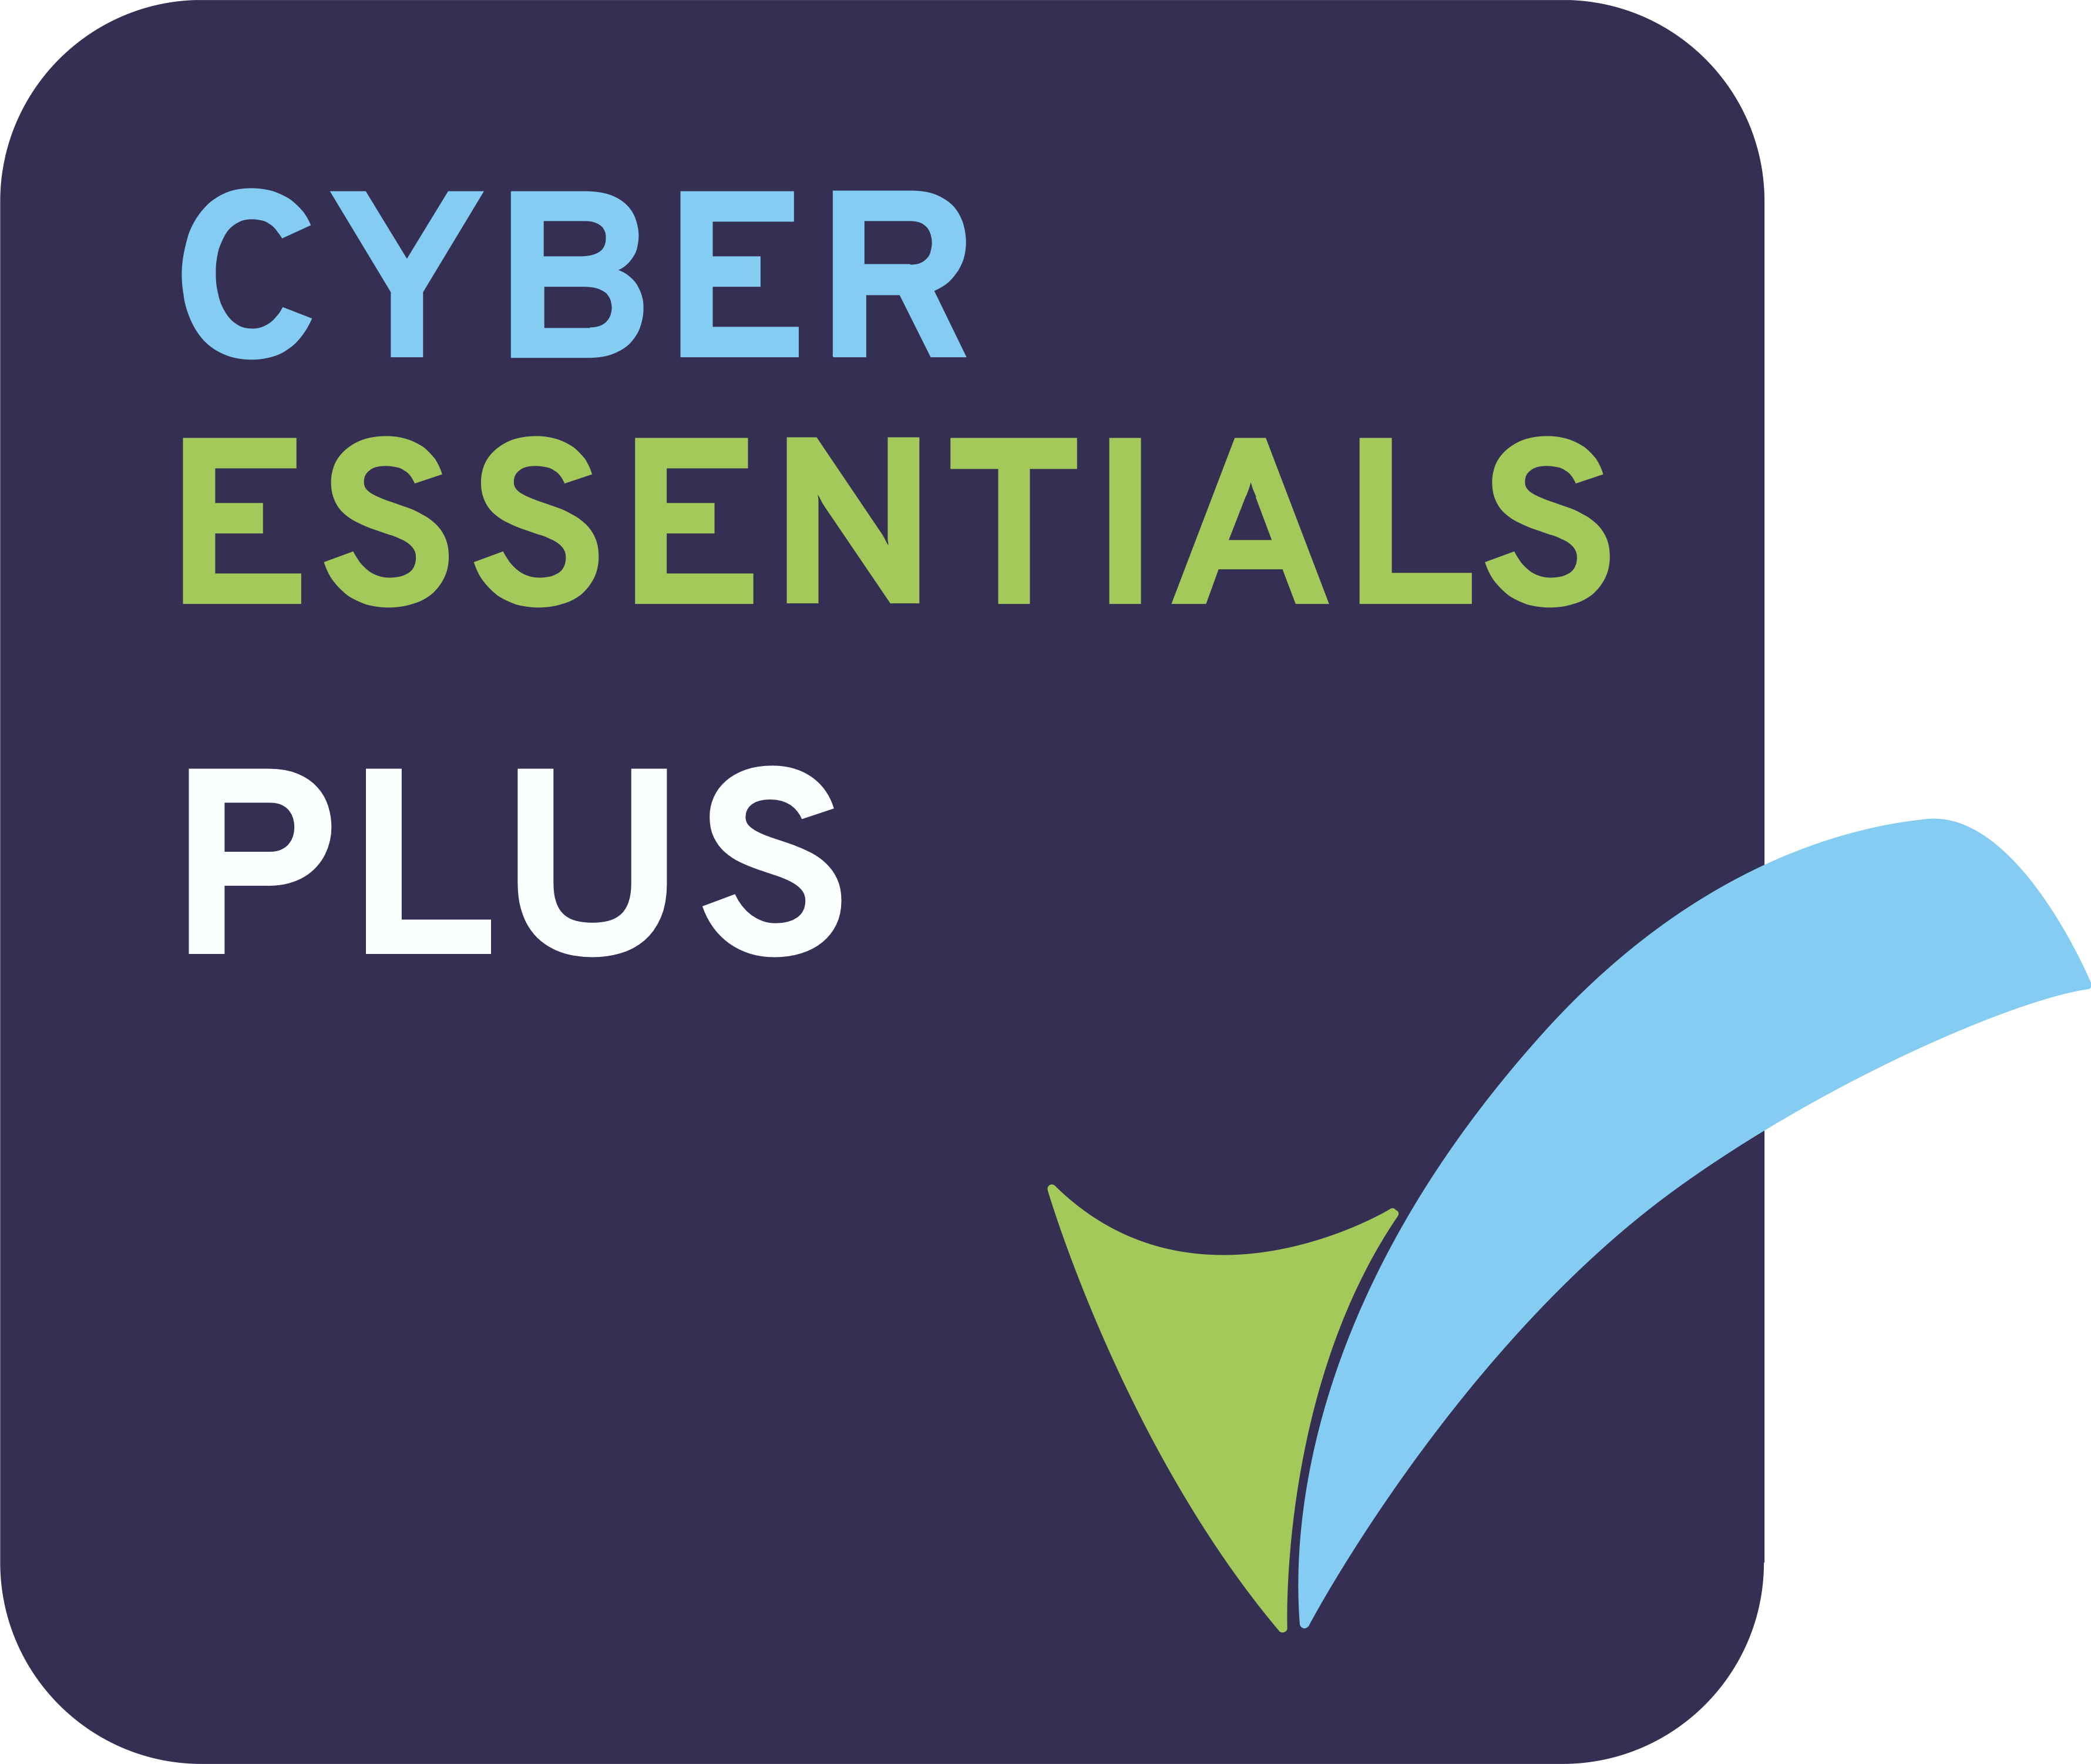 Cyber essentioals plus logo